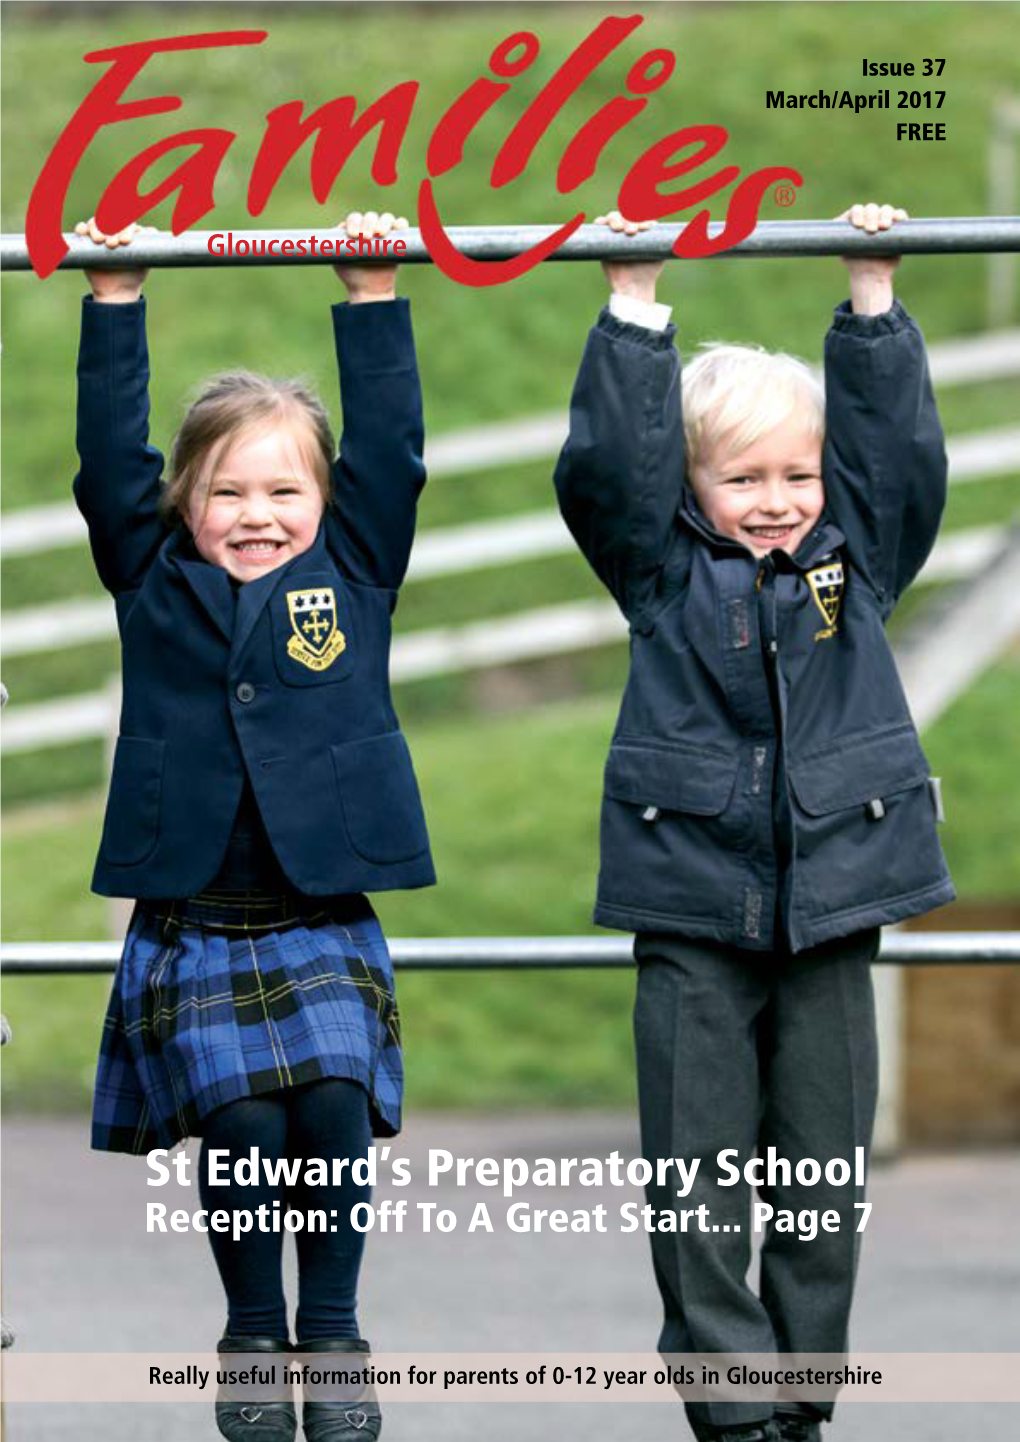 St Edward's Preparatory School